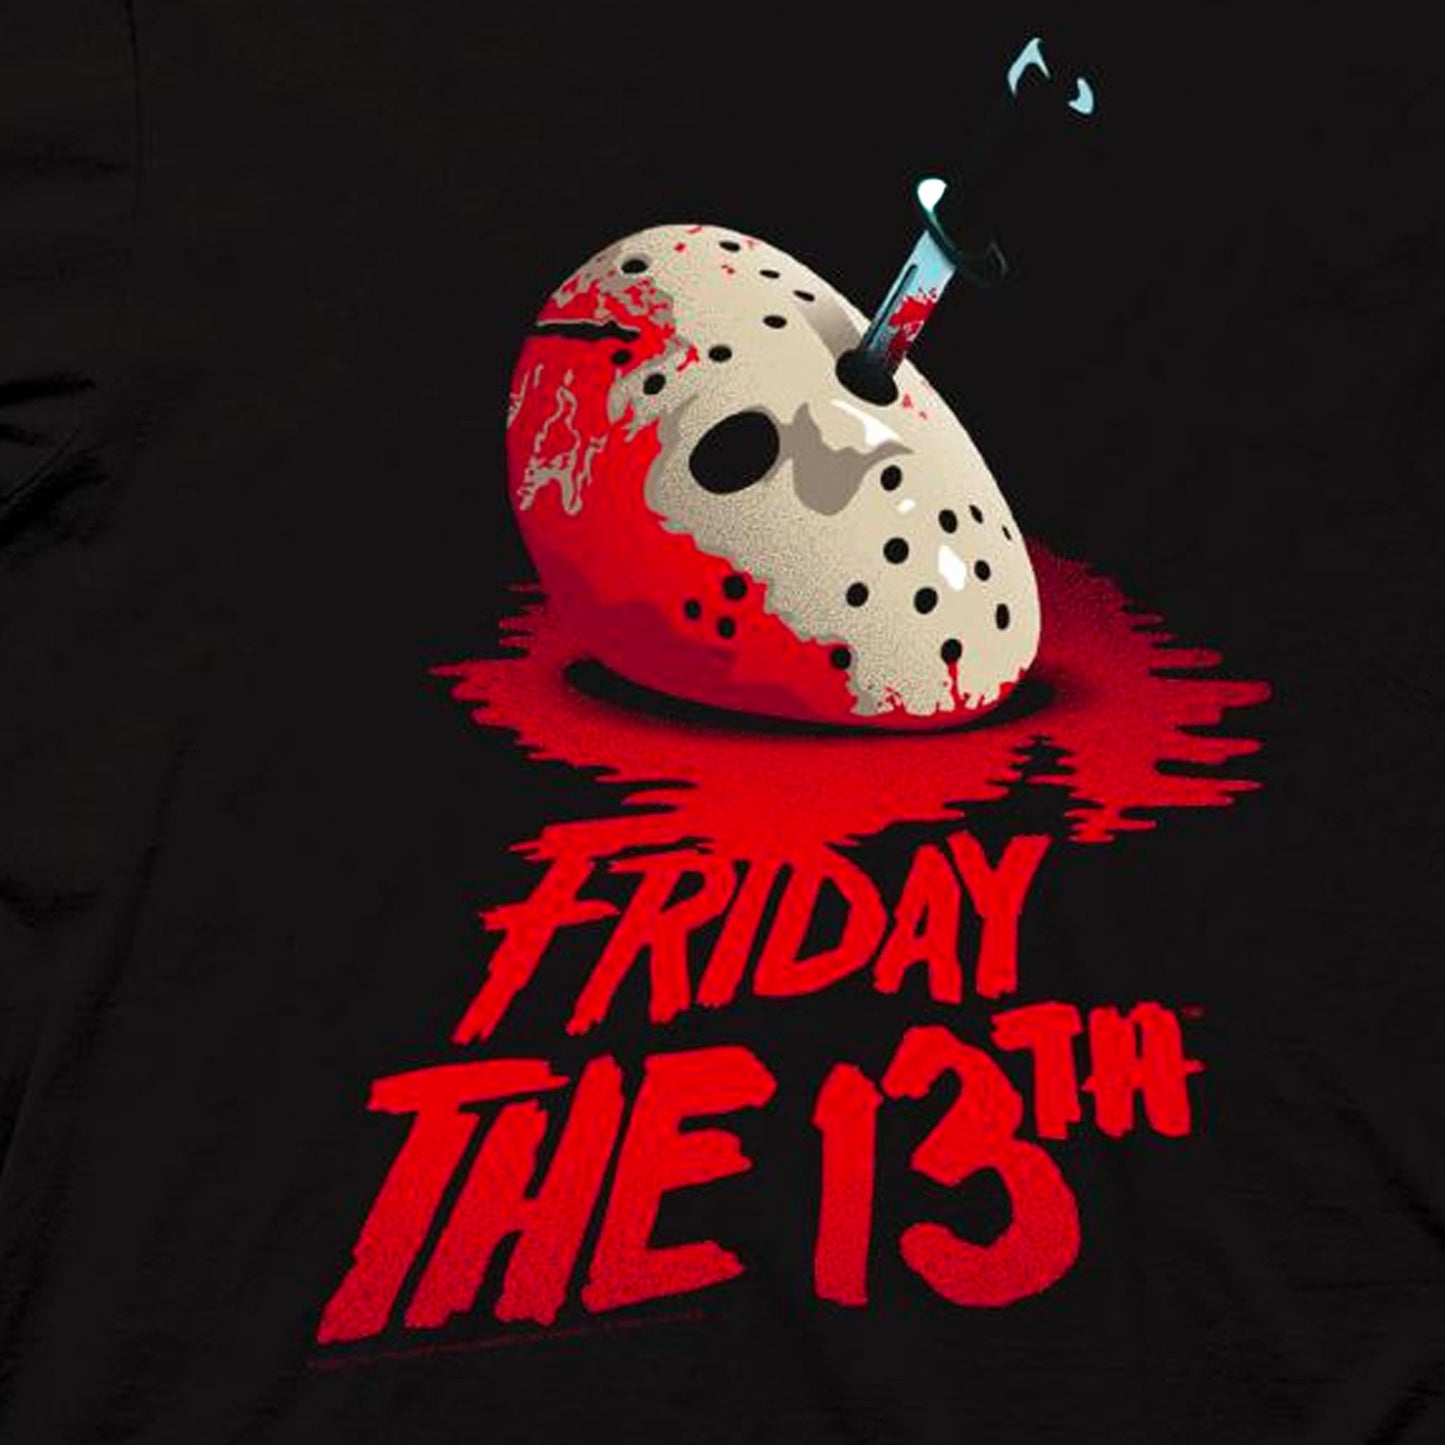 Jason Knife in Mask (Friday the 13th) Black Unisex Shirt